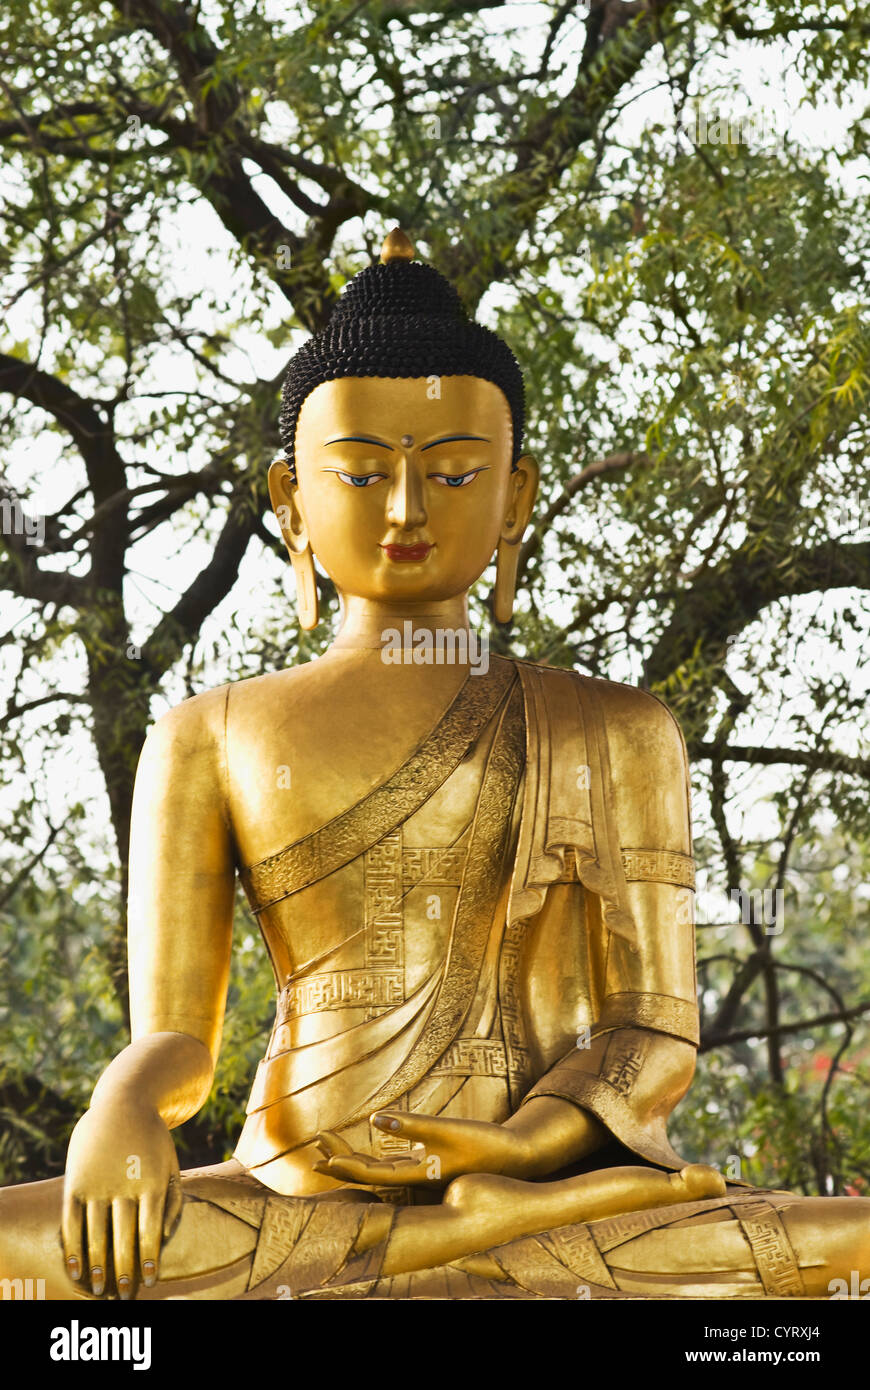 Statue de Bouddha dans un Park, New Delhi, Inde Banque D'Images